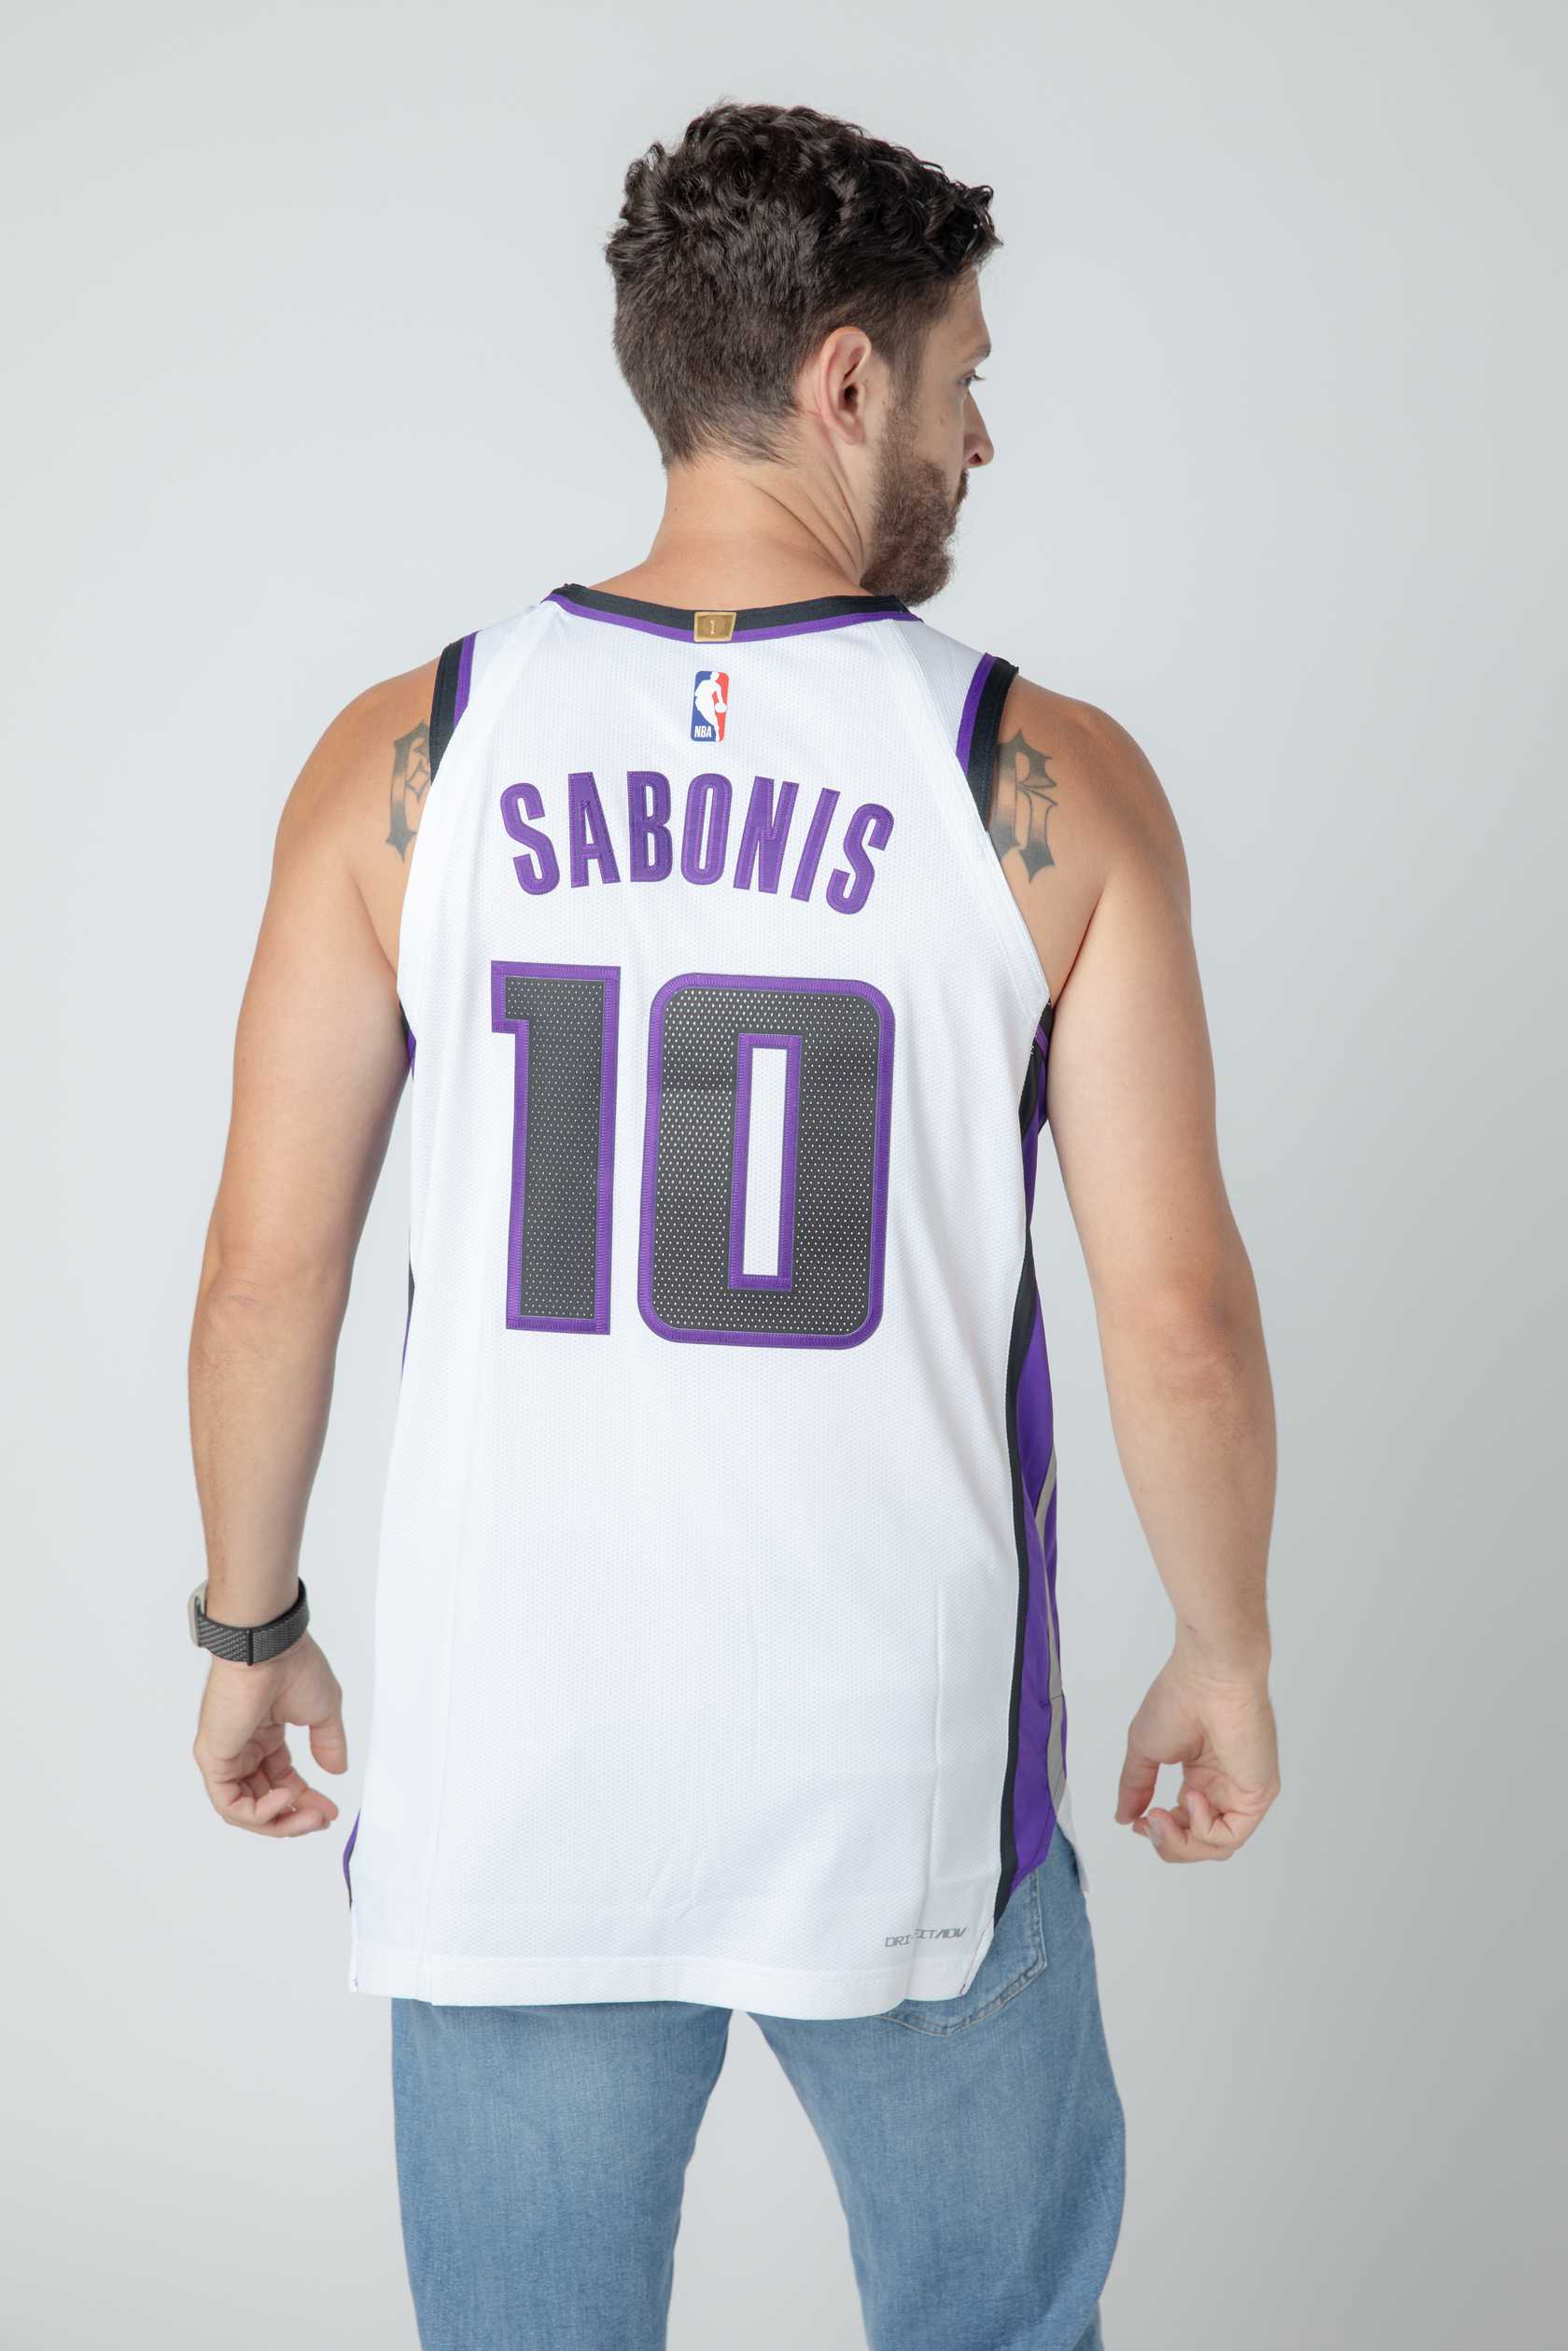 San Antonio Spurs Men's Nike Custom Personalized Association Authentic Jersey